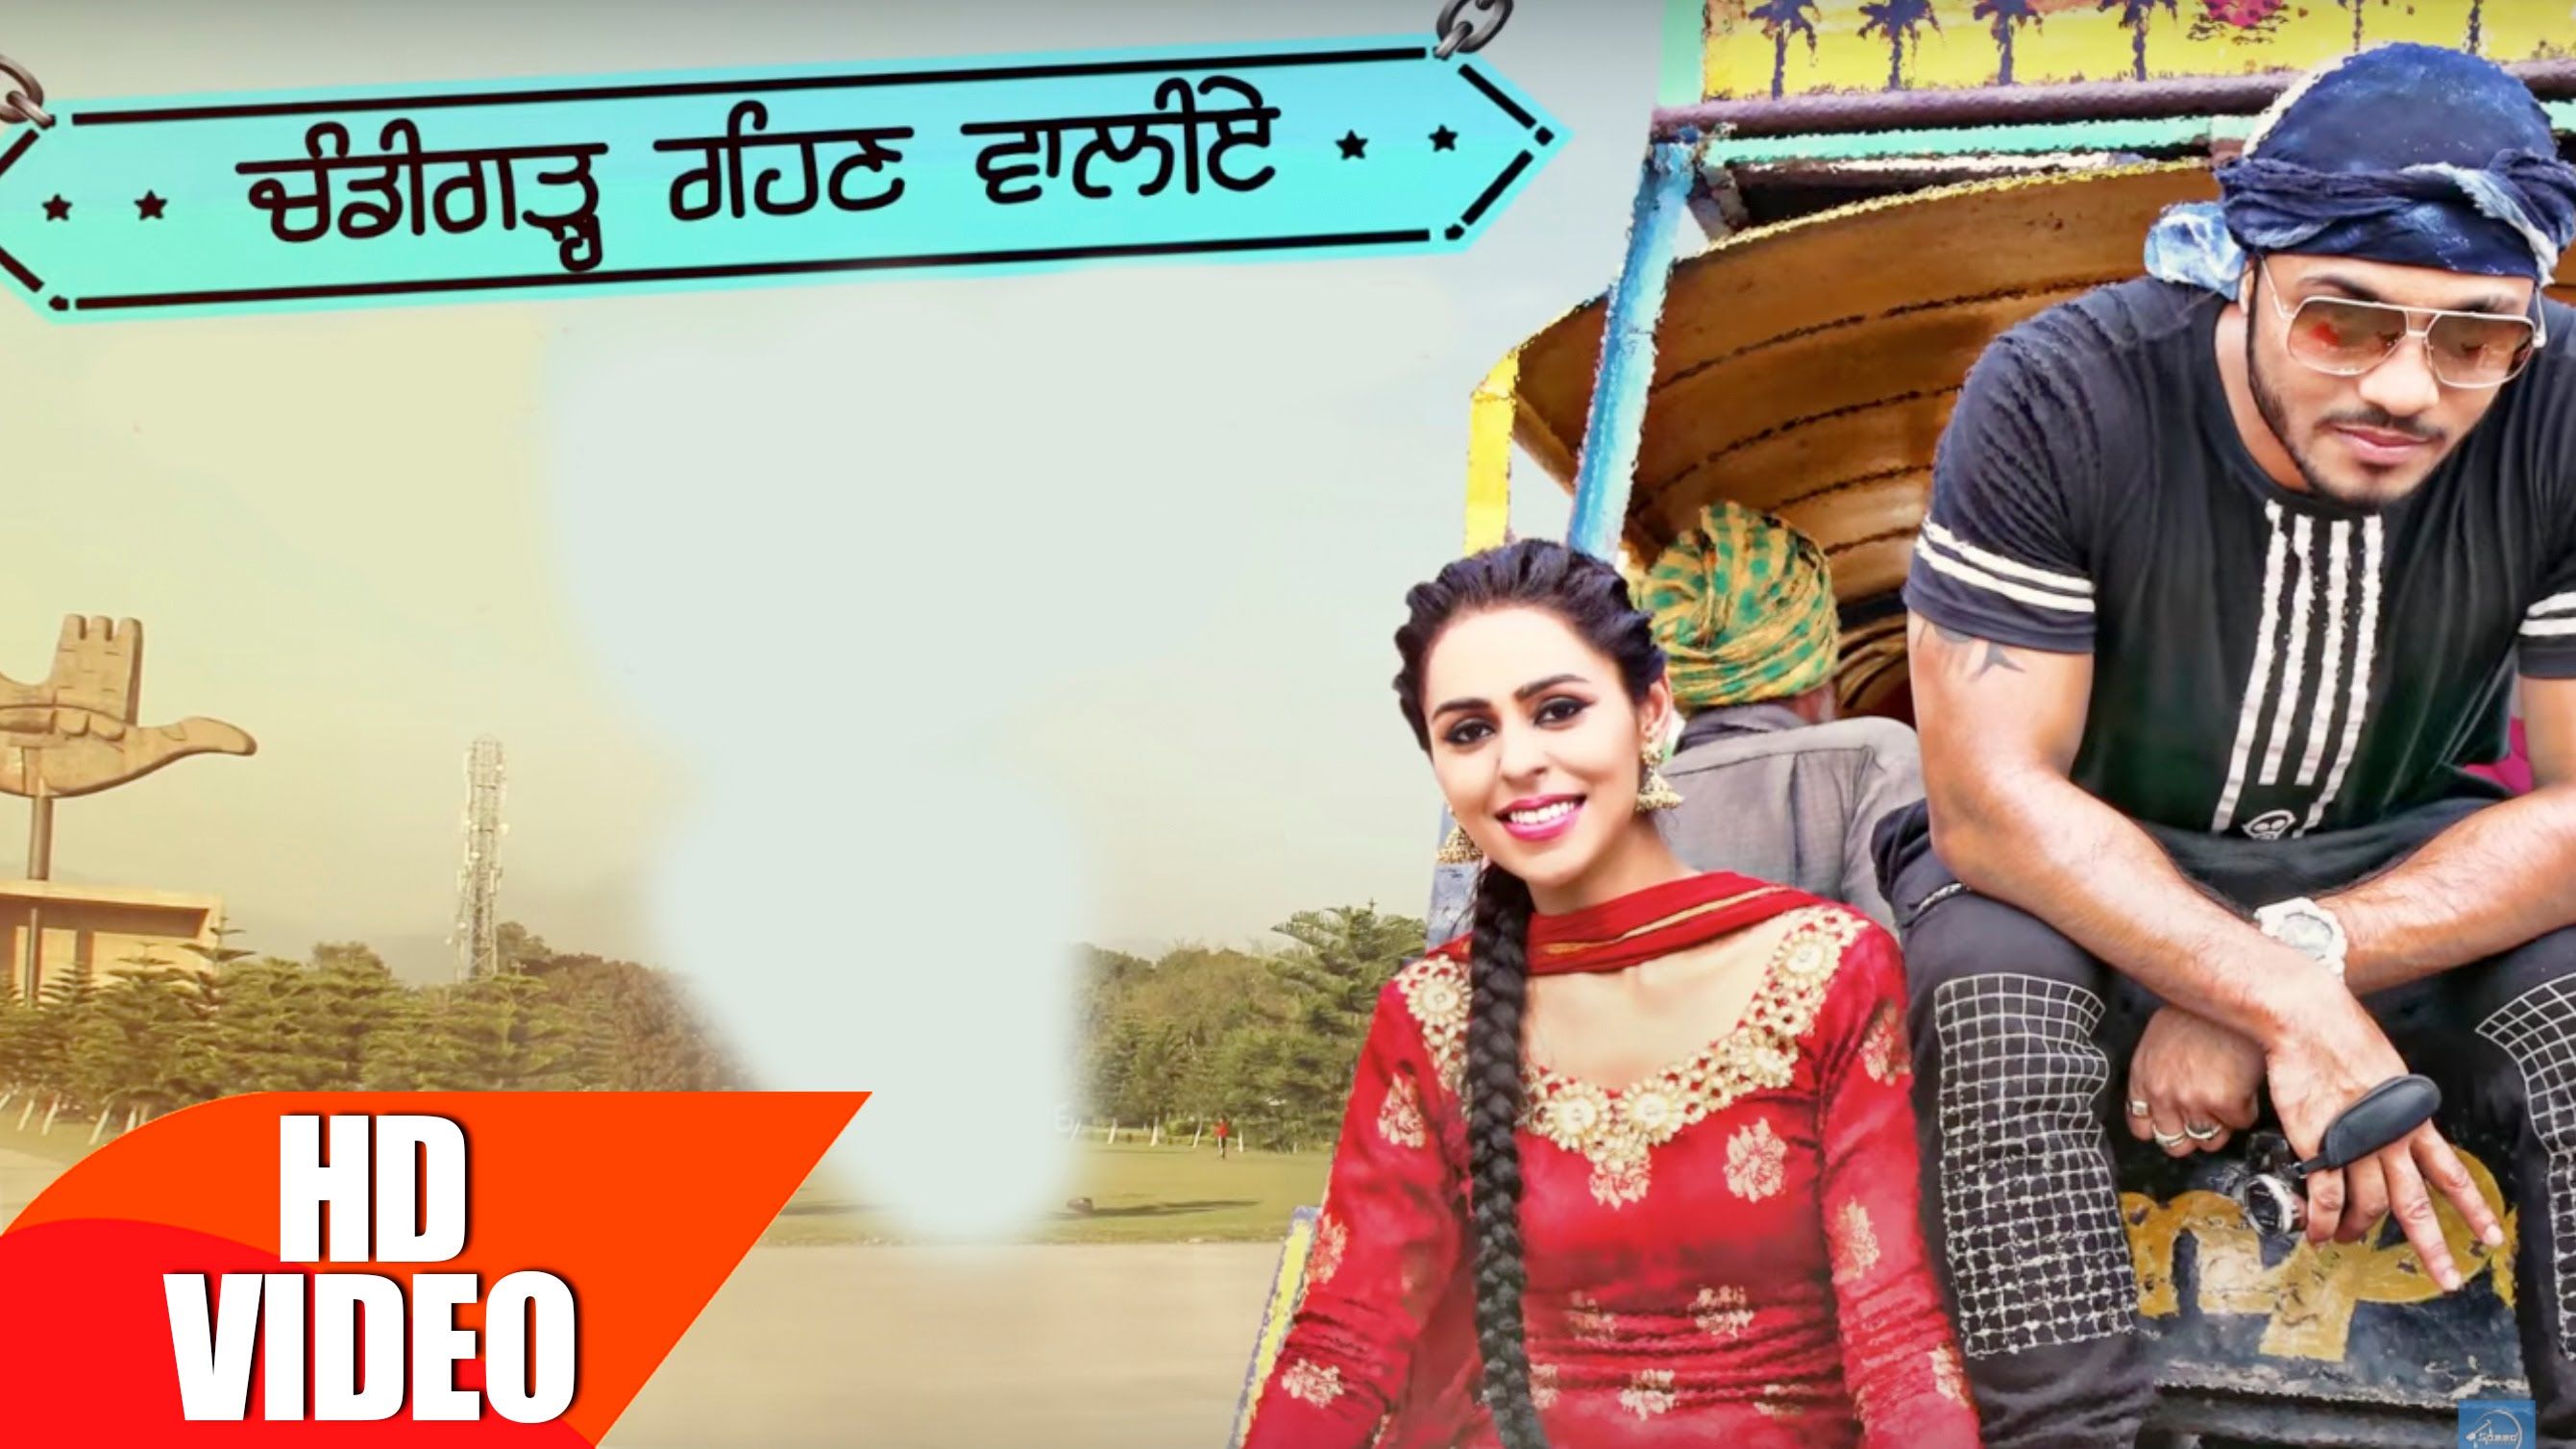 Punjabi mp4 video songs download hd quality